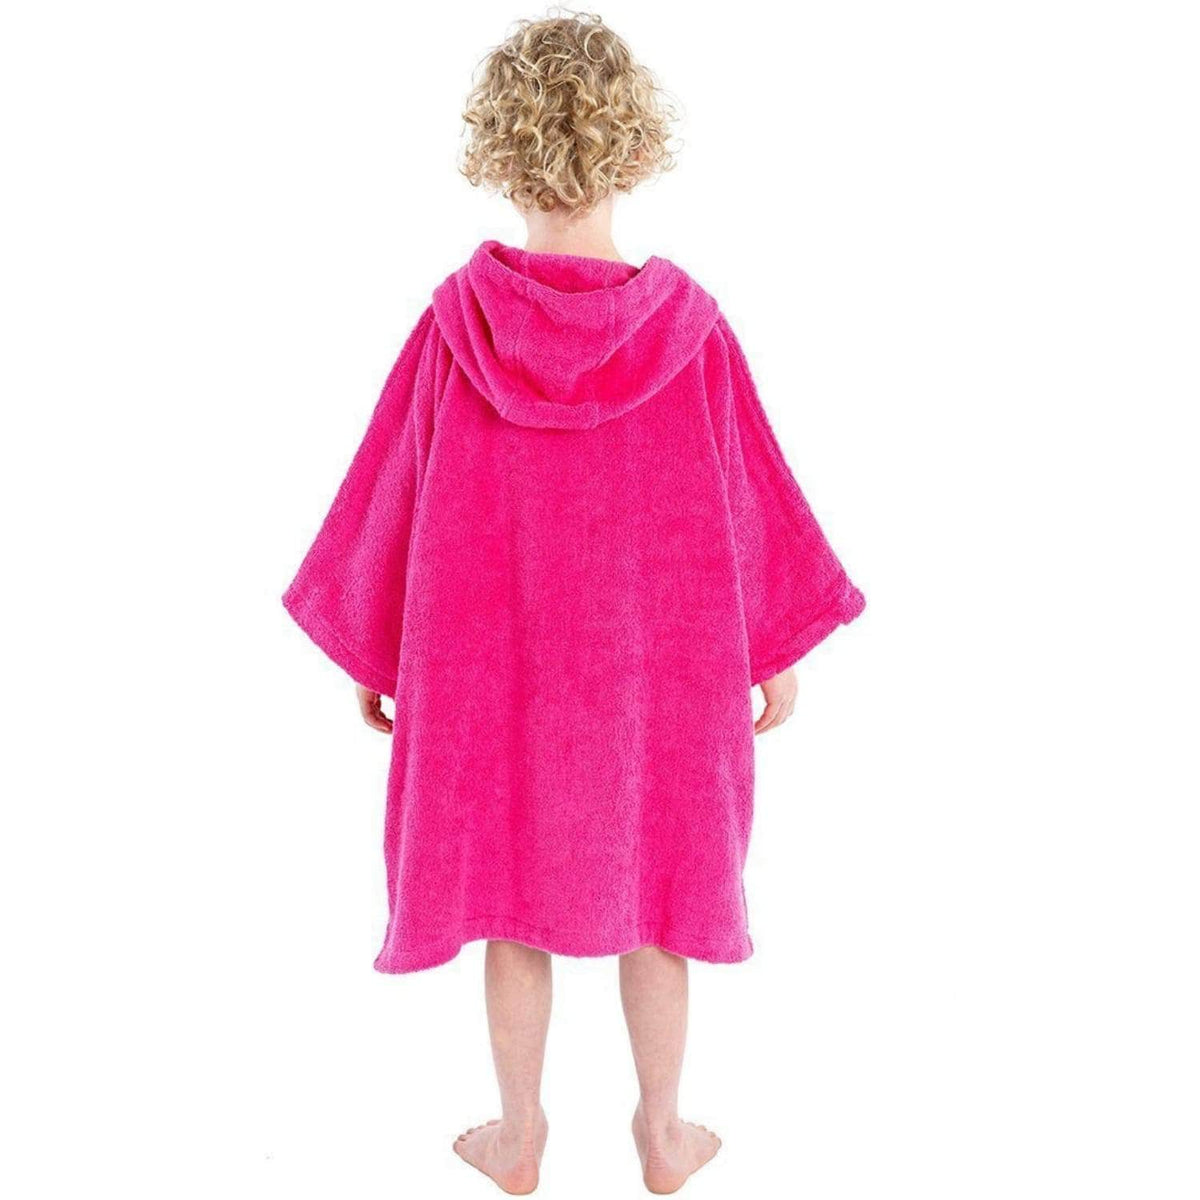 Dryrobe Kids Organic Cotton Short Sleeve Towel Robe - Pink - Changing Robe Poncho Towel by Dryrobe 10-14 Years